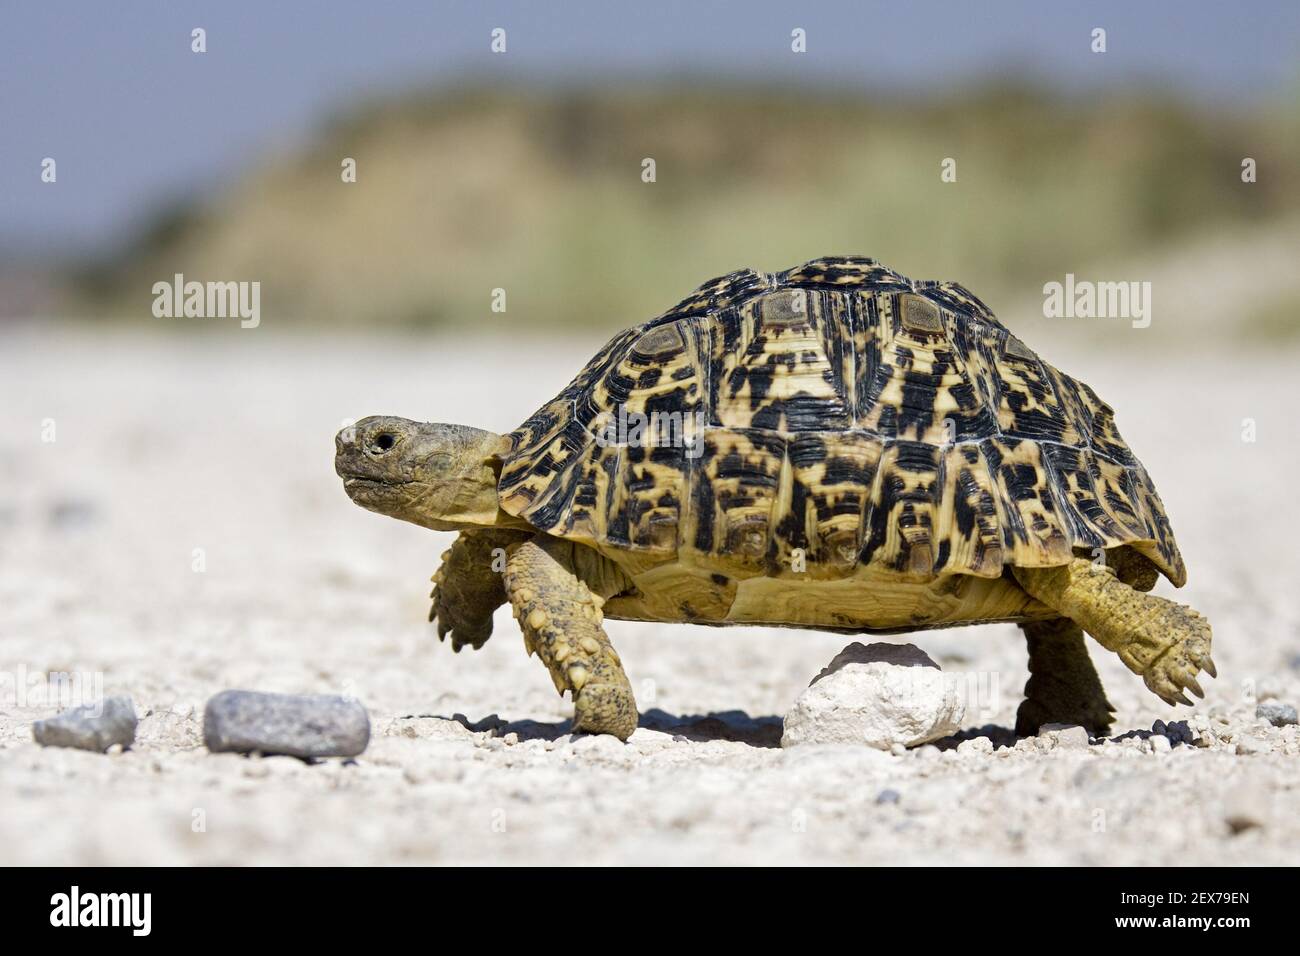 Tortue terrestre (Testudinidae), Namibie, Afrique australe, tortues terrestres, Afrique Banque D'Images